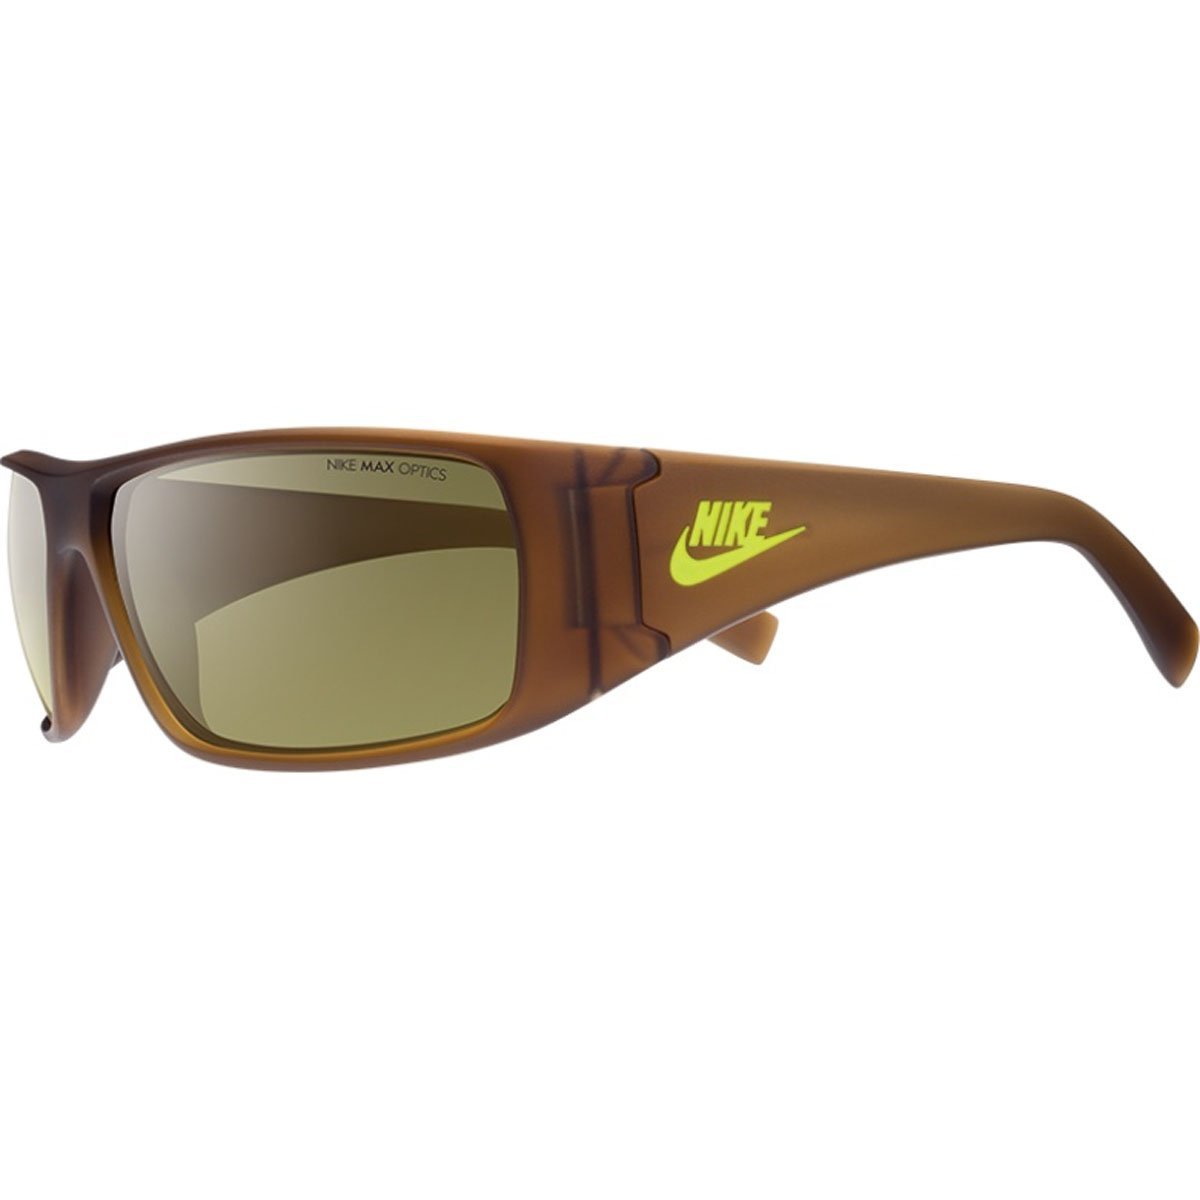 Nike EV0648 Grind Sport Sunglasses